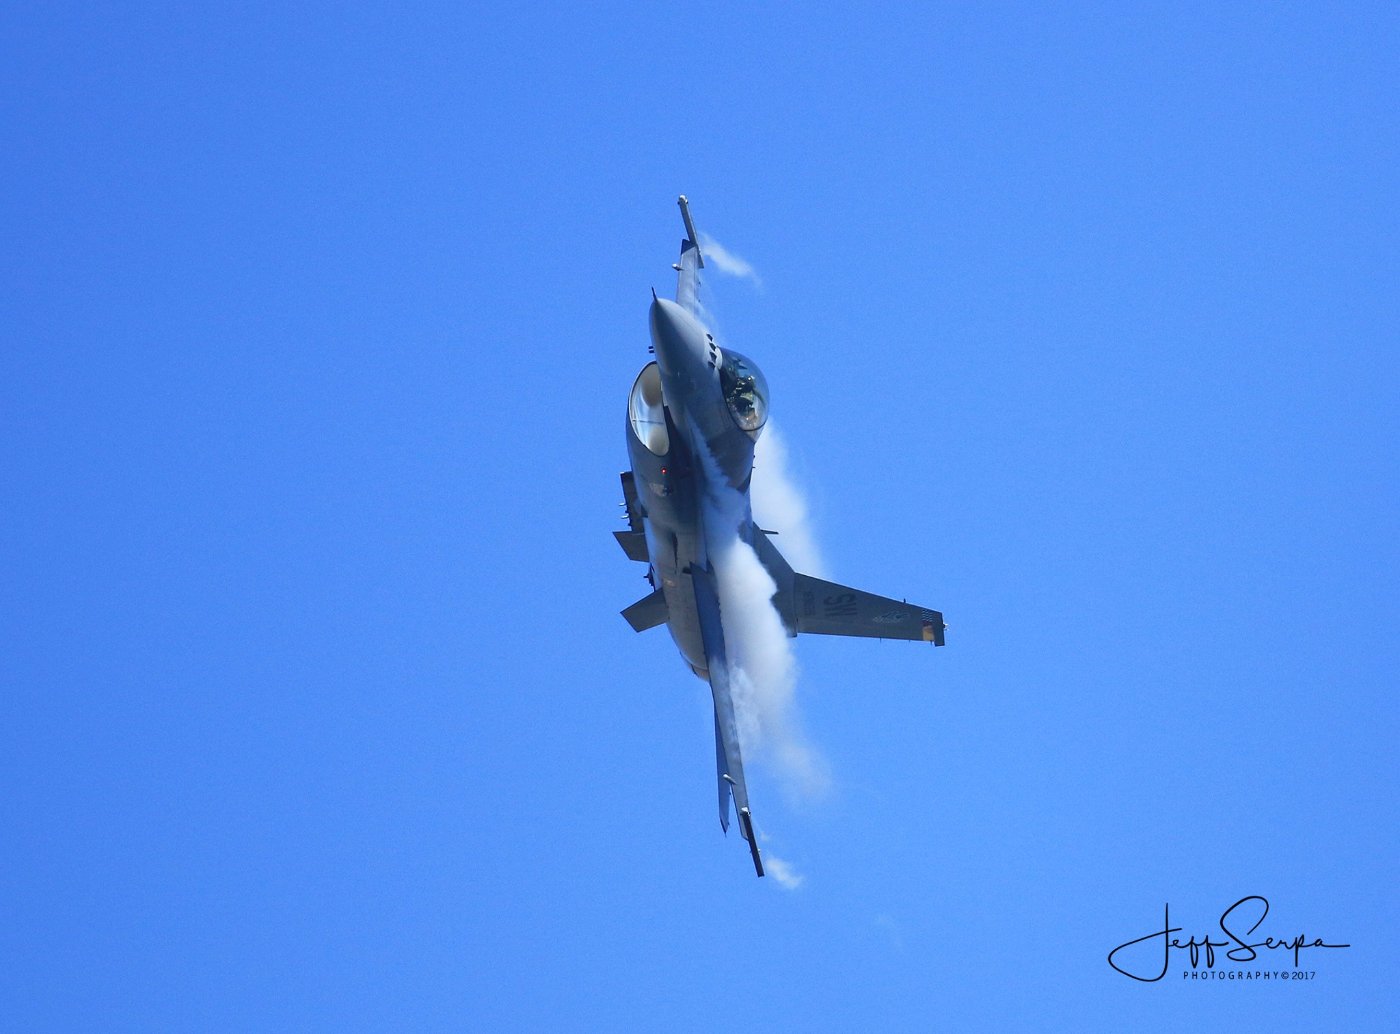 The F16 Viper Demo during the Huntington Beach Airshow